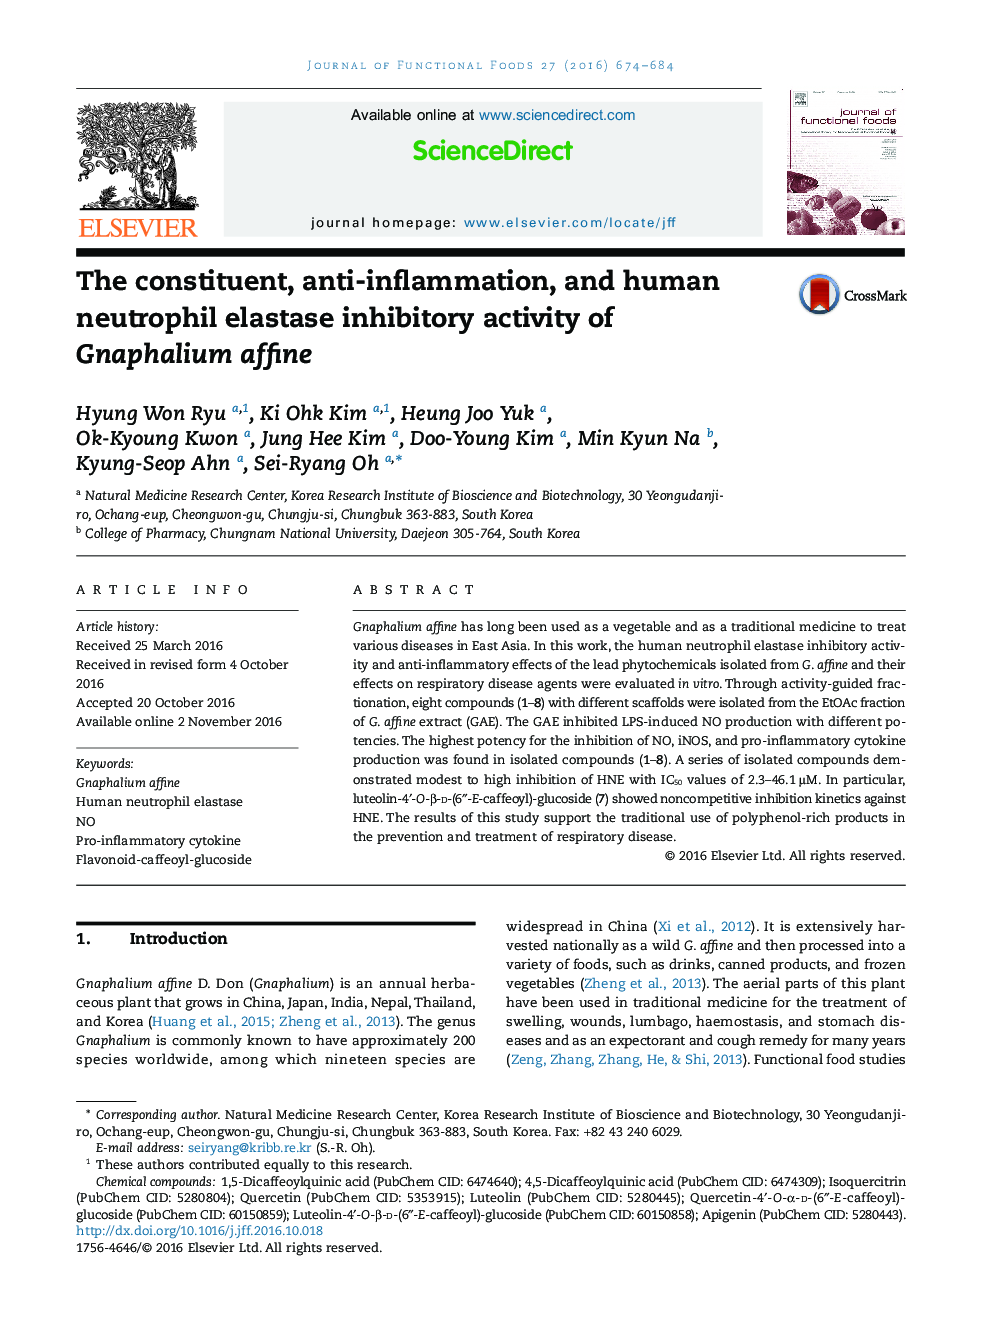 The constituent, anti-inflammation, and human neutrophil elastase inhibitory activity of Gnaphalium affine